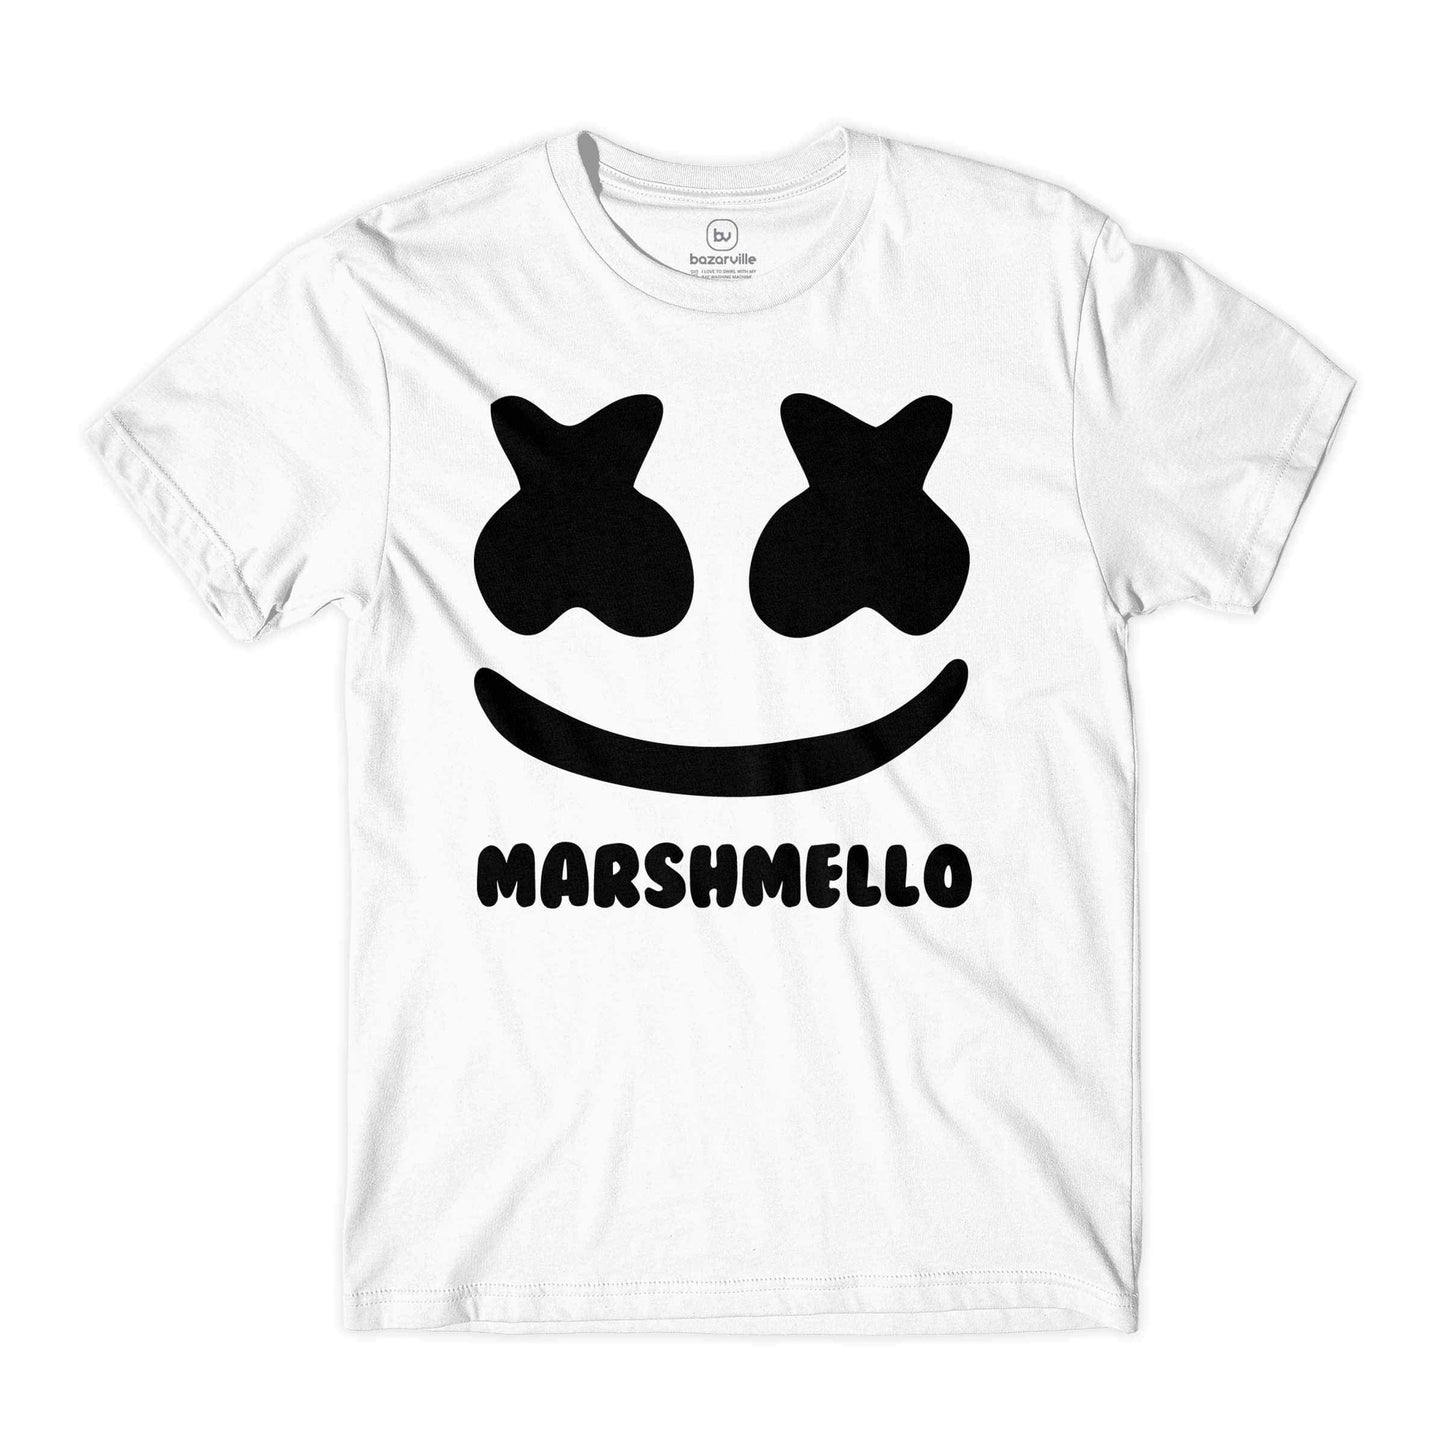 Bazarville Customer S / White Marshmello - Manimal With Name